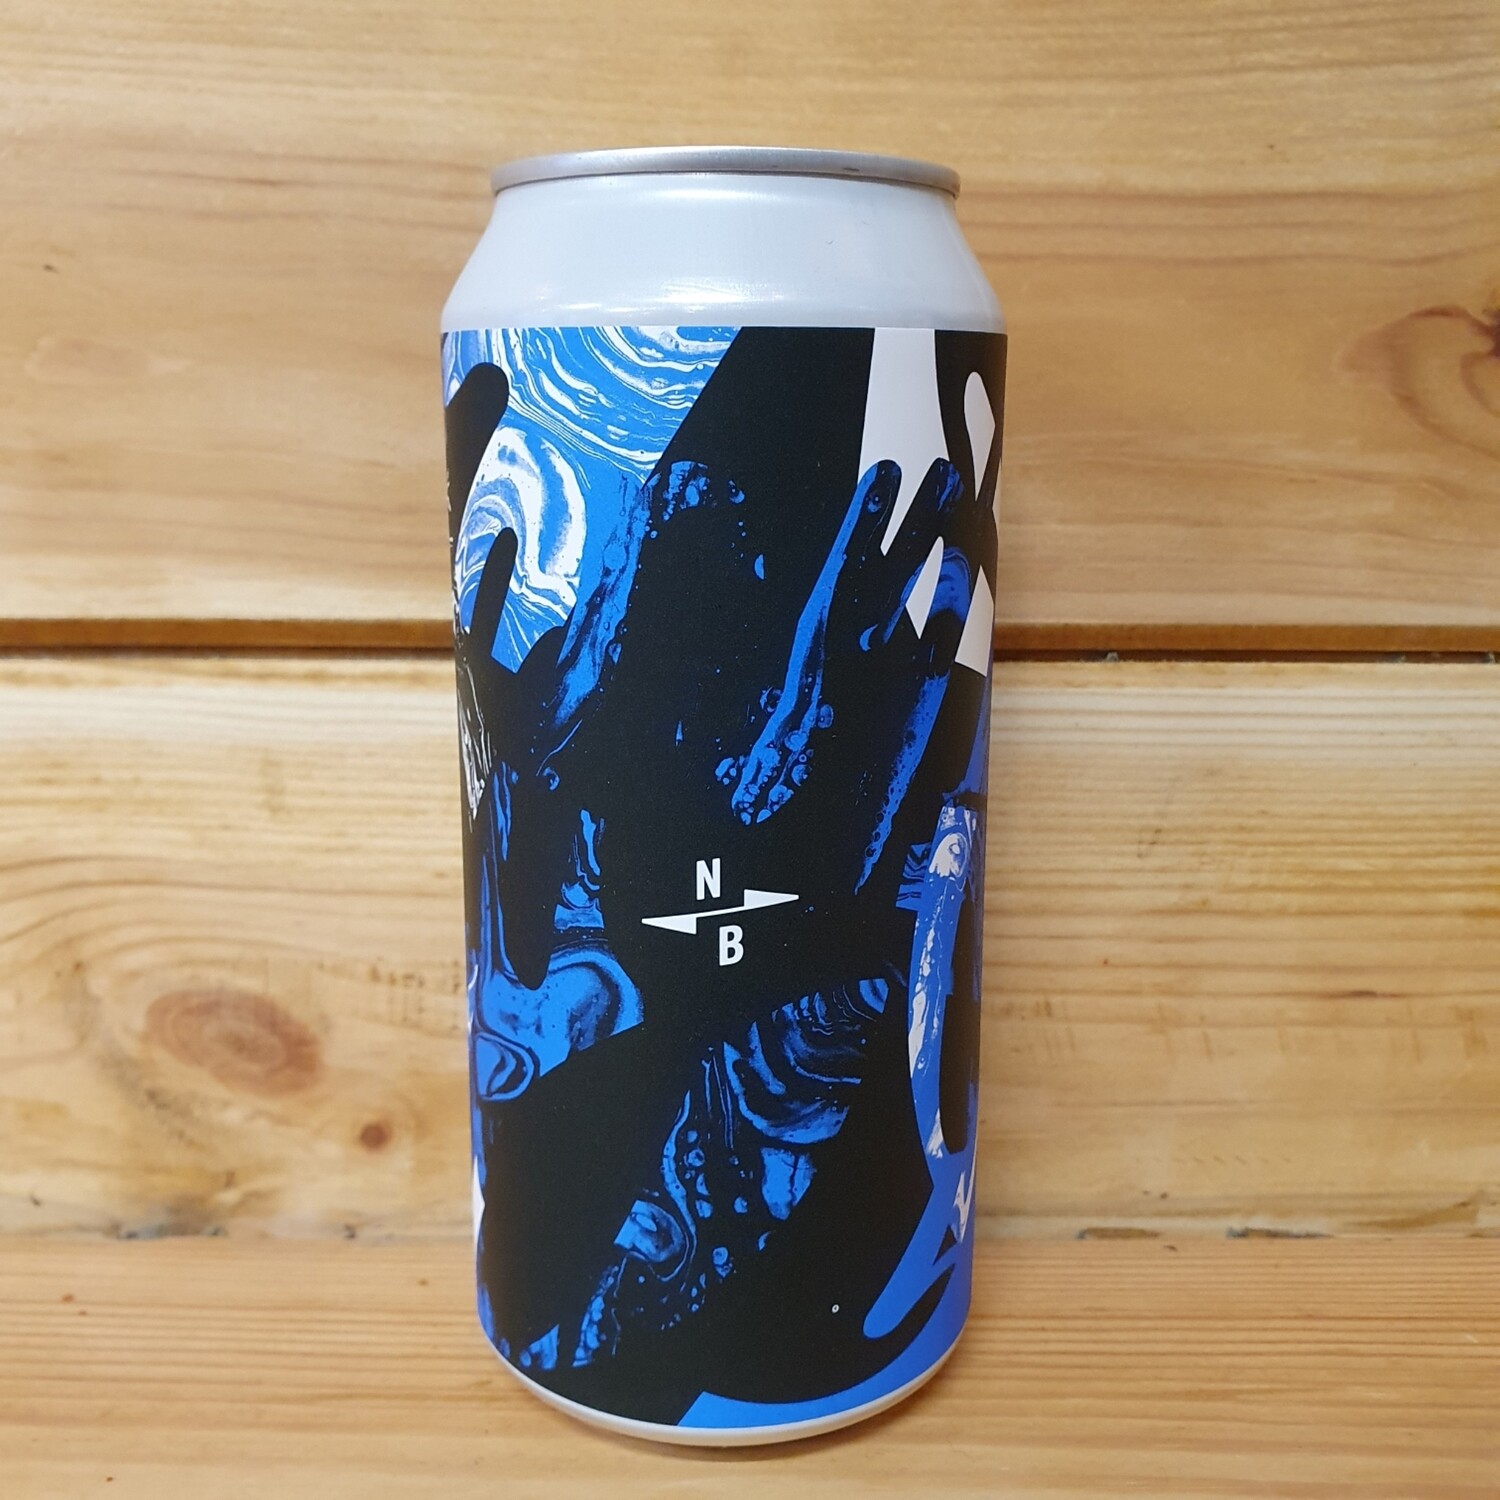 North Brewing X Unity - Sour IPA - Blueberry & Plum 6% (440ml)